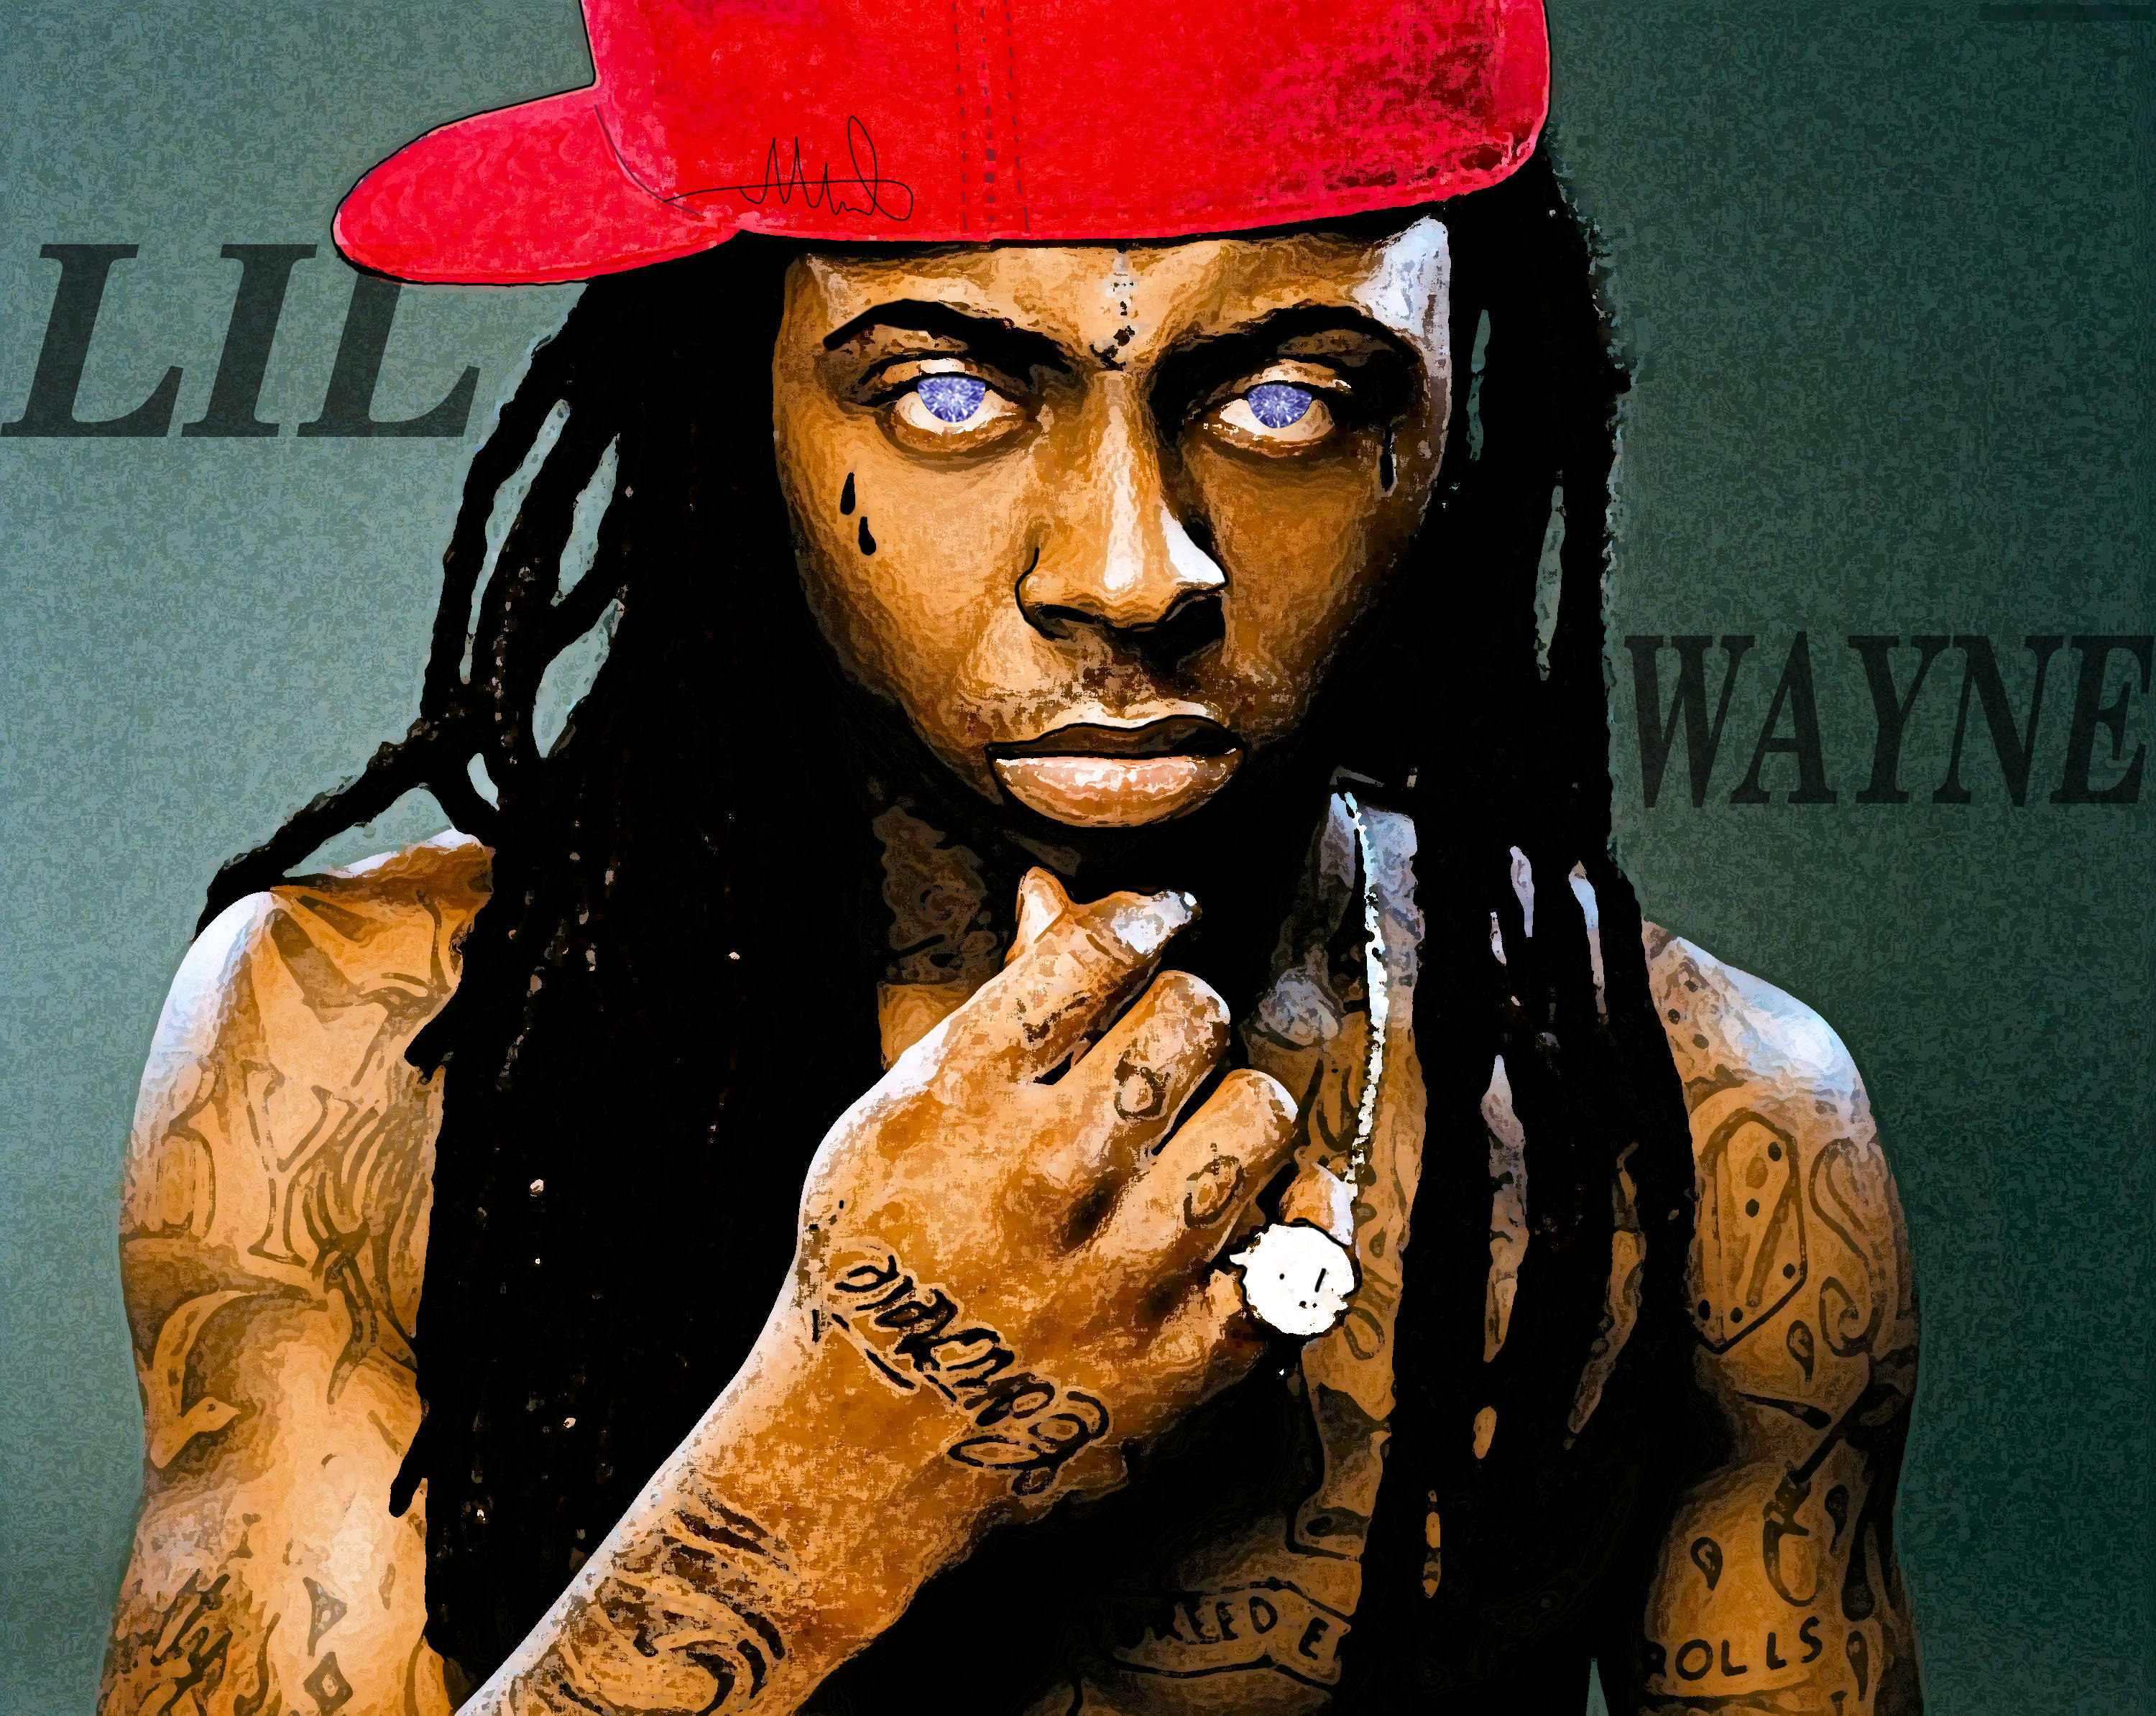 Download Lil Wayne Digital Art Wallpaper 